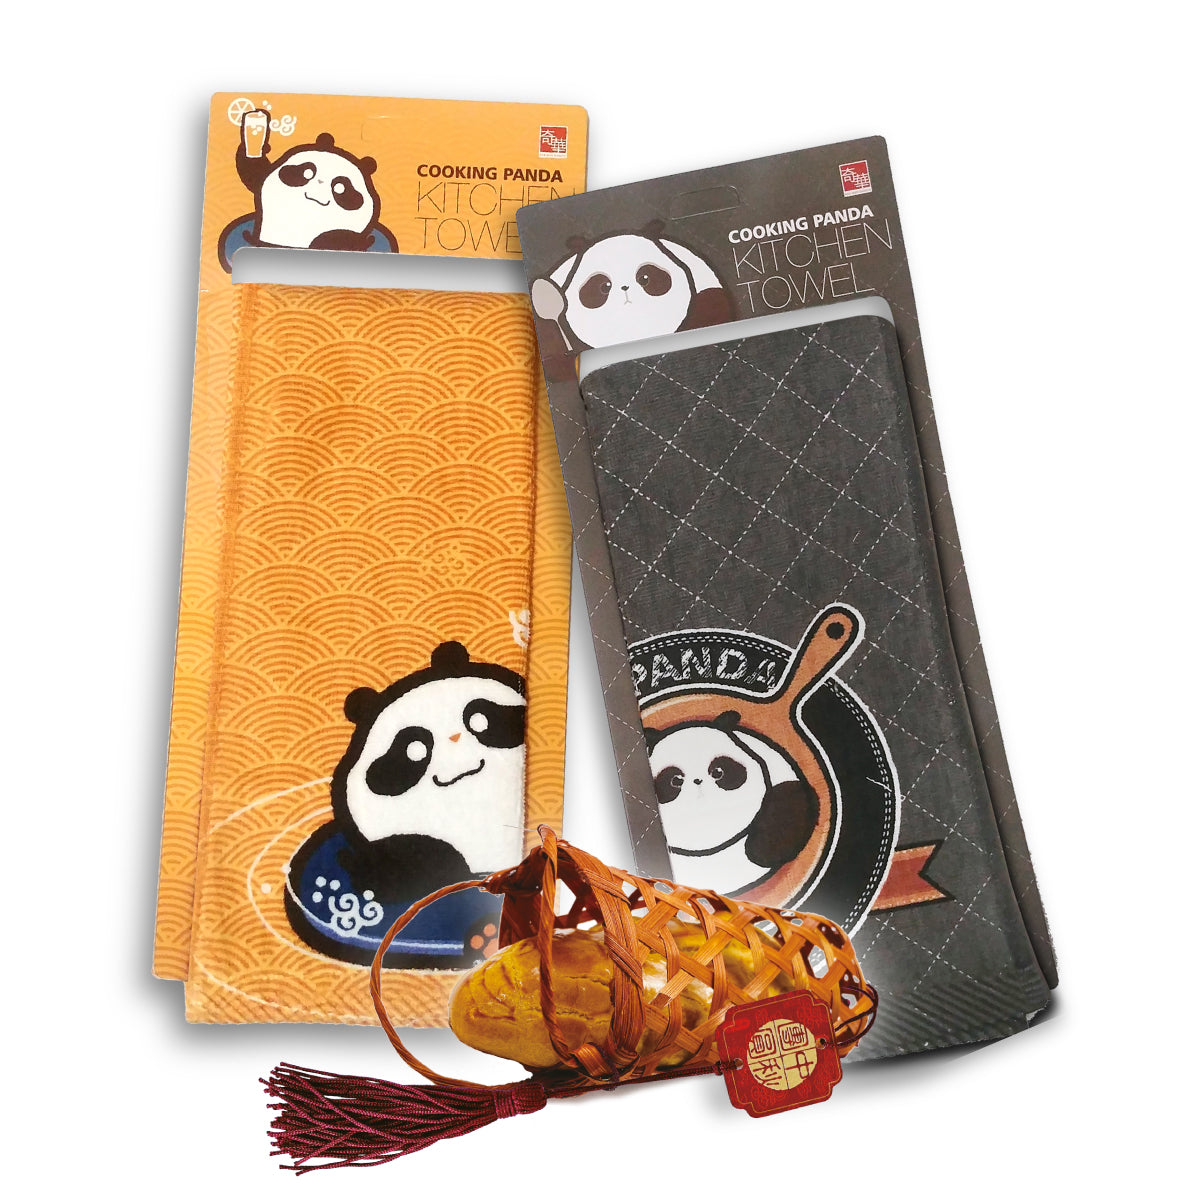 Free Panda Gift - OMA8 Tier 3